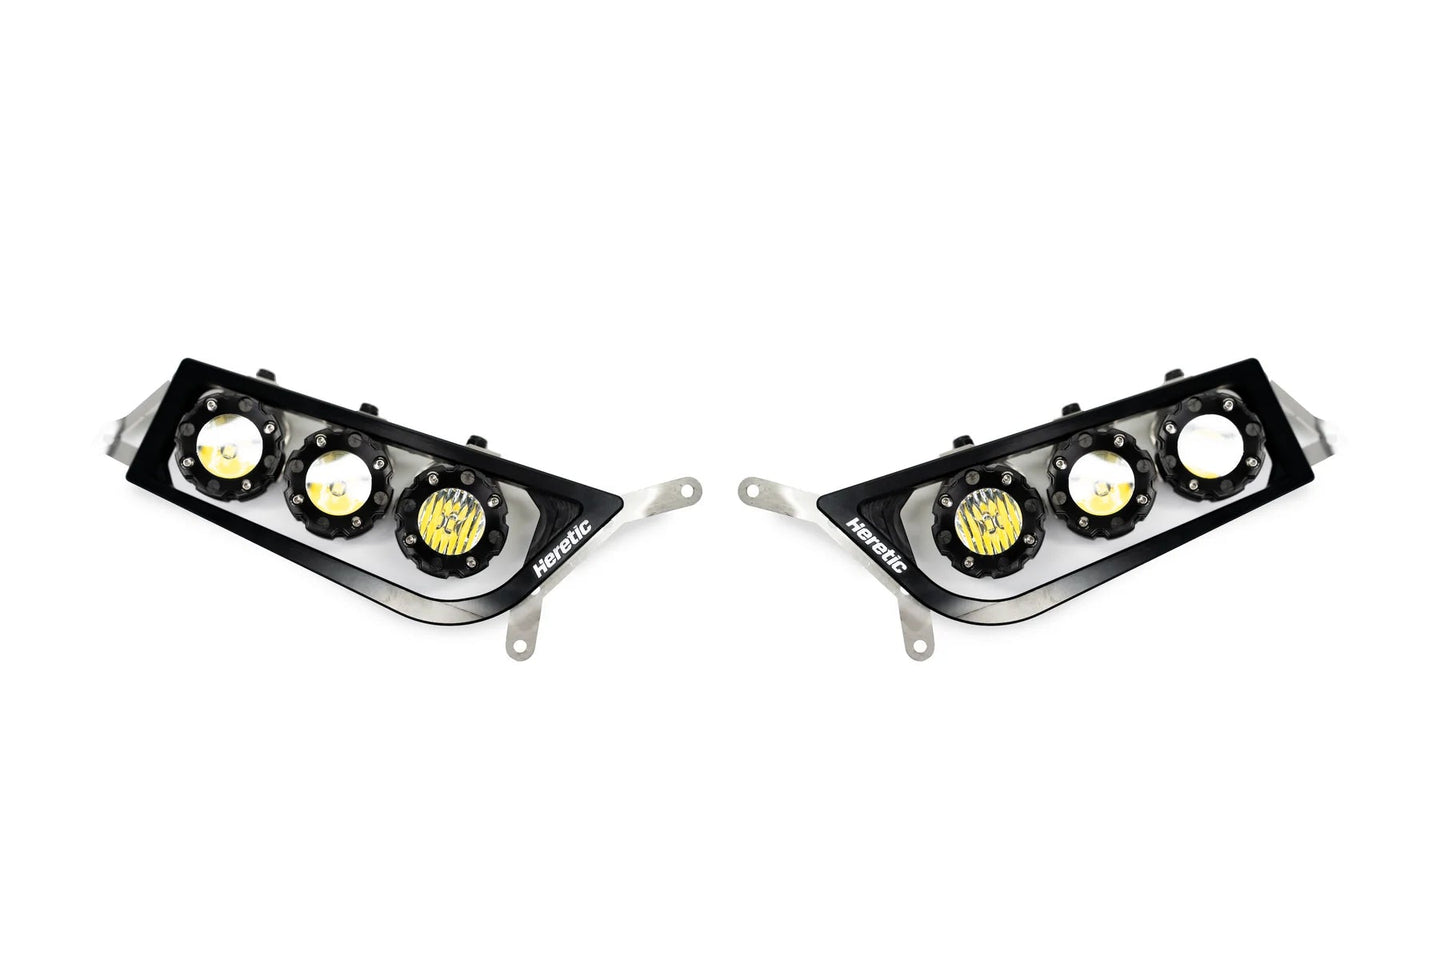 Polaris RZR S / GENERAL LED Headlights - UTV Parts | R1 Industries 